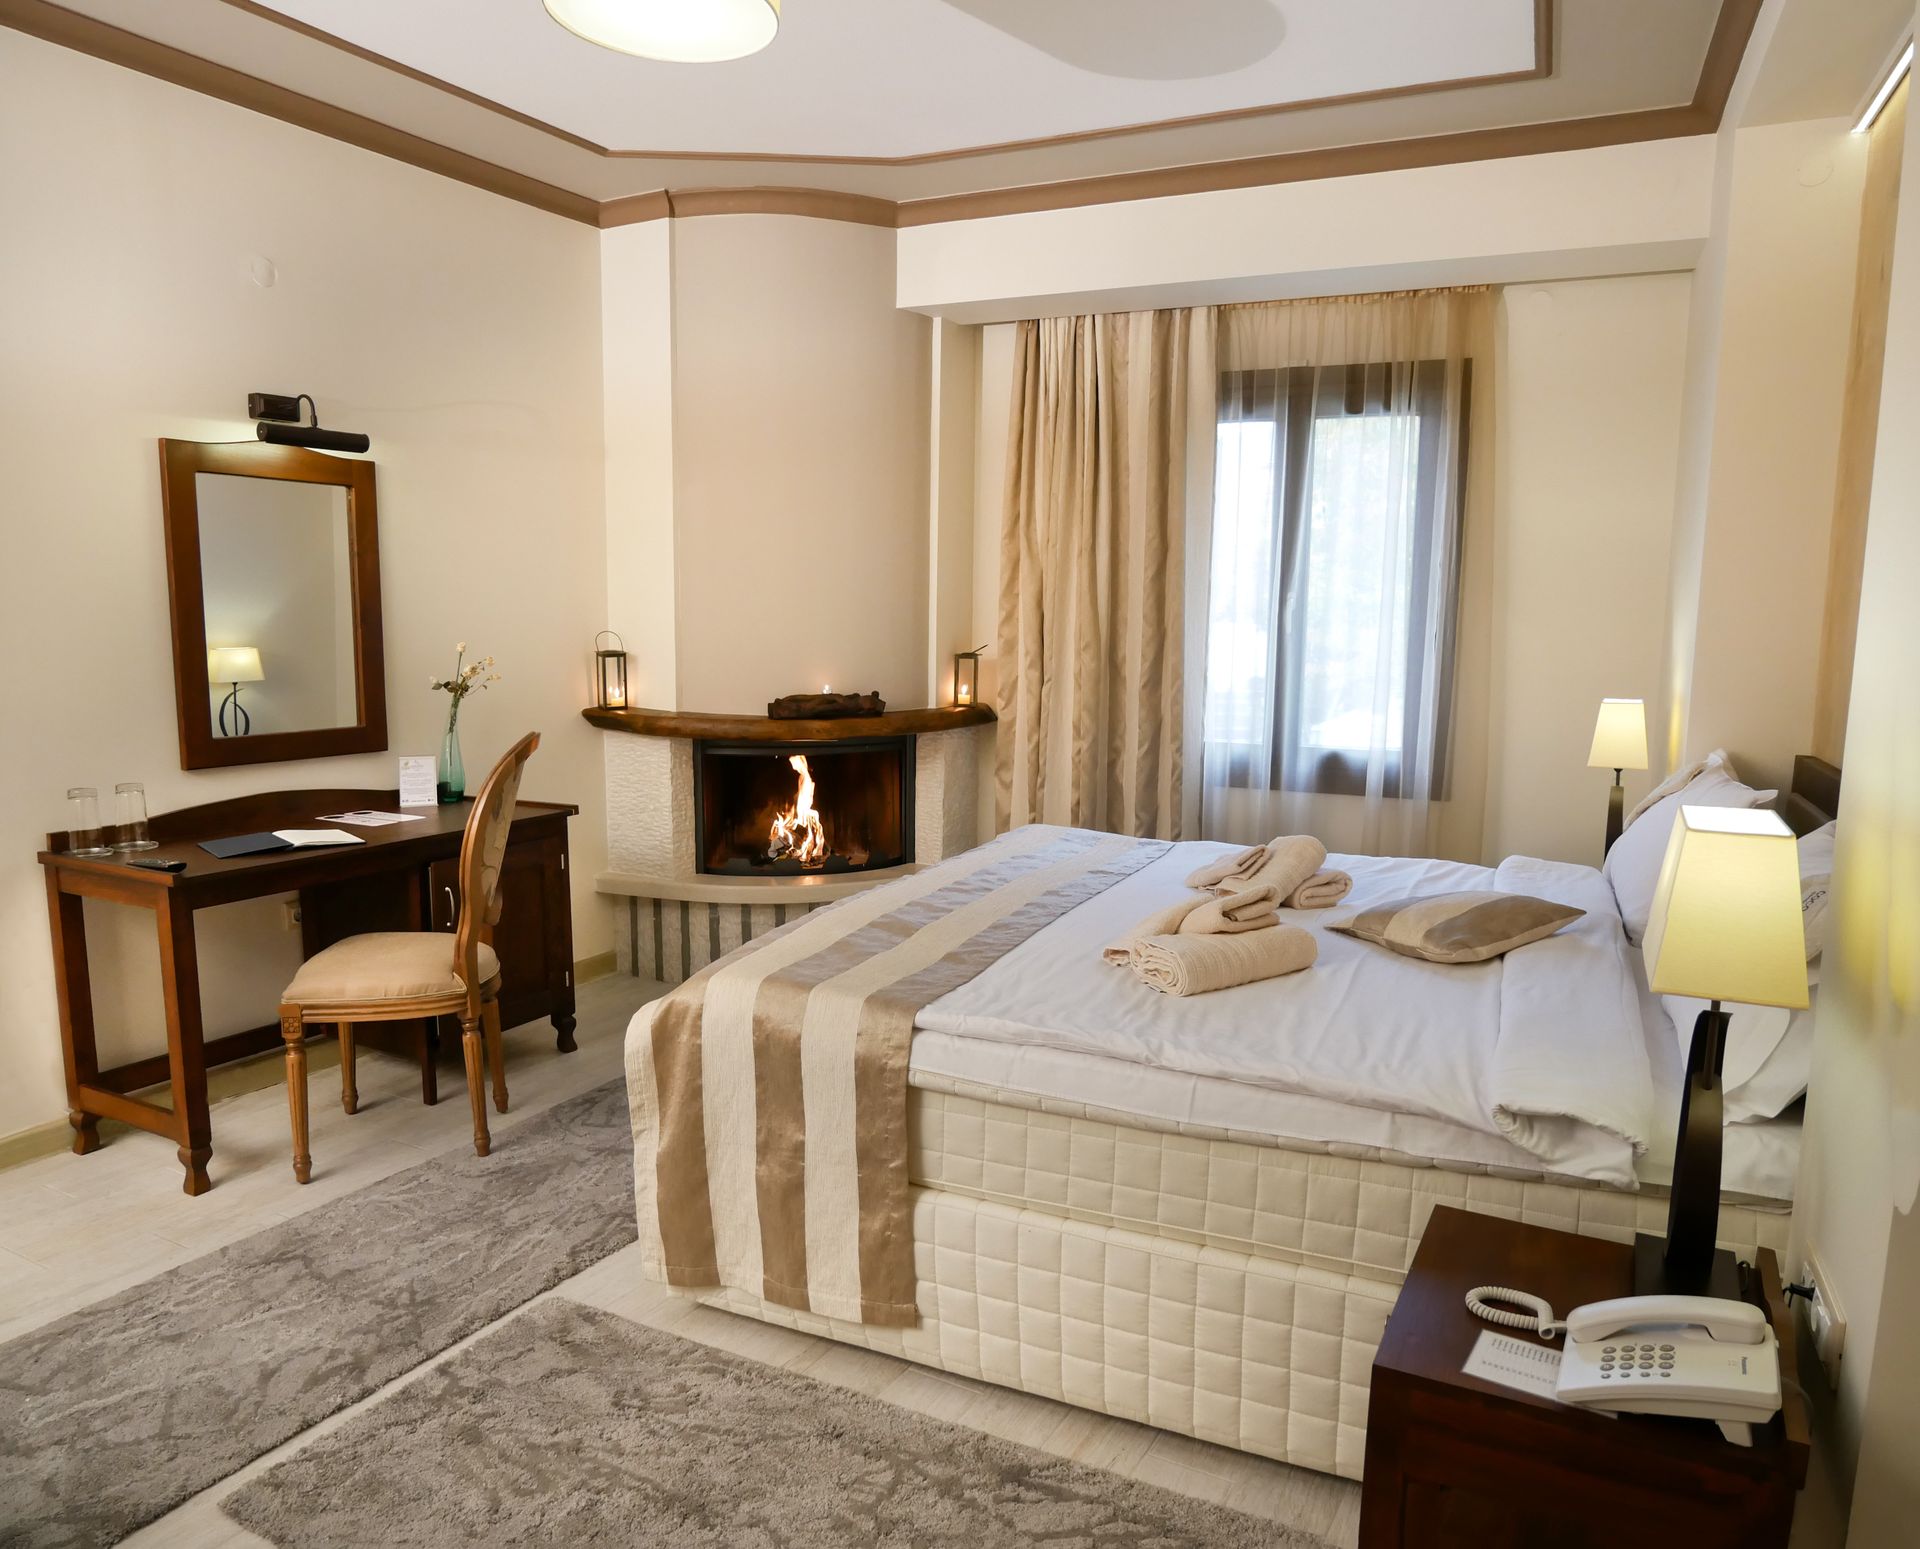 Rodovoli Hotel Konitsa - Κόνιτσα ✦ -19% ✦ 2 Ημέρες